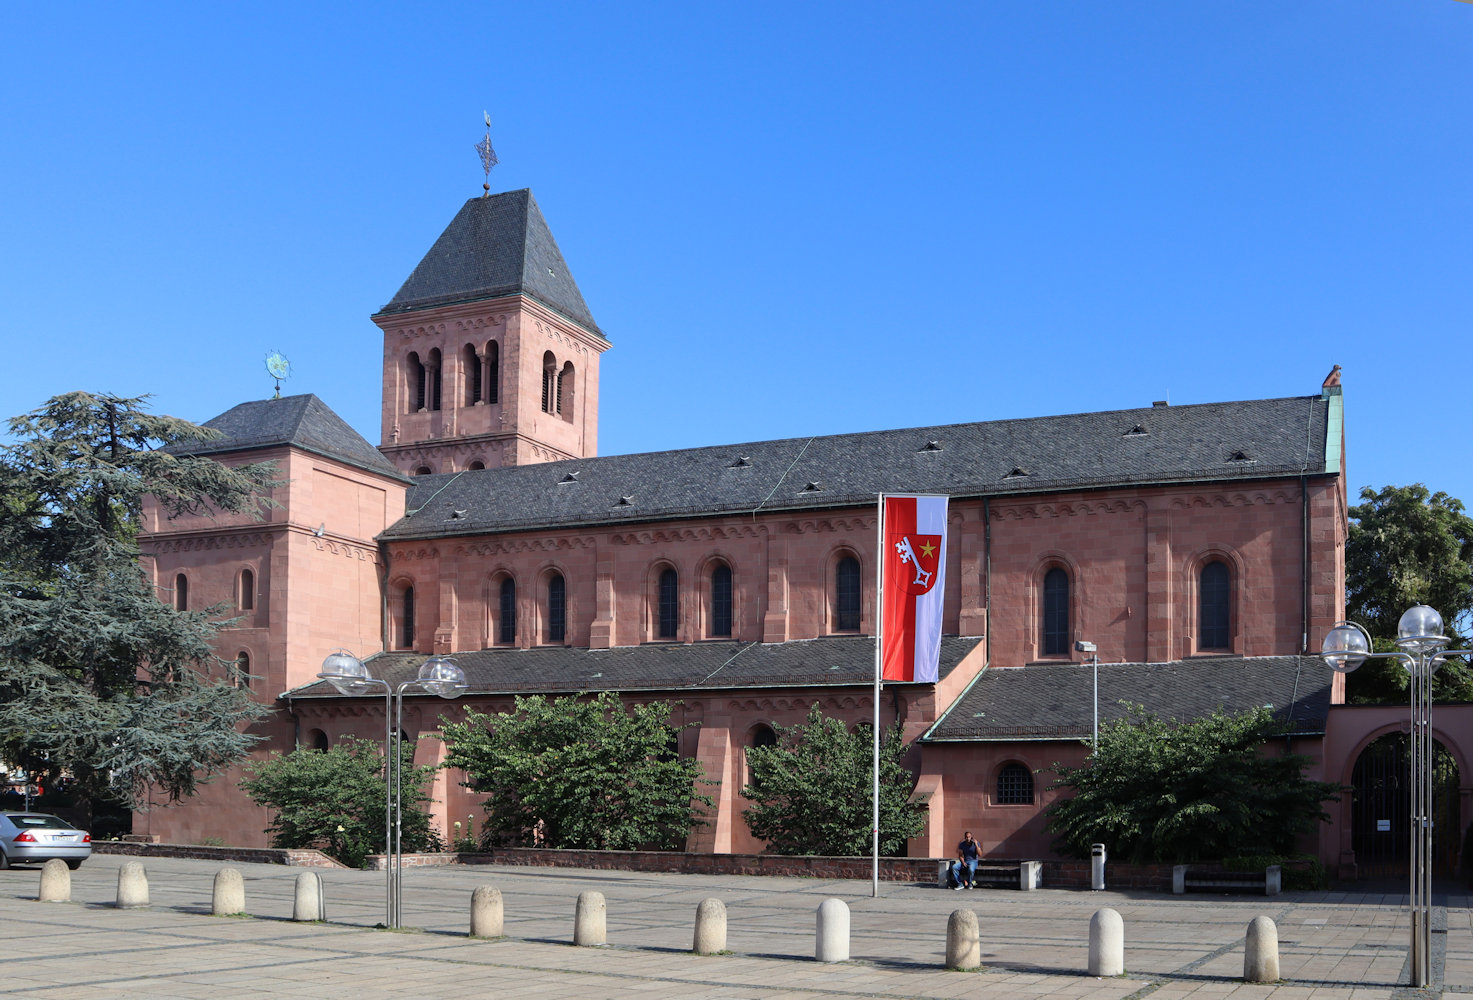 Martinskirche in Worms